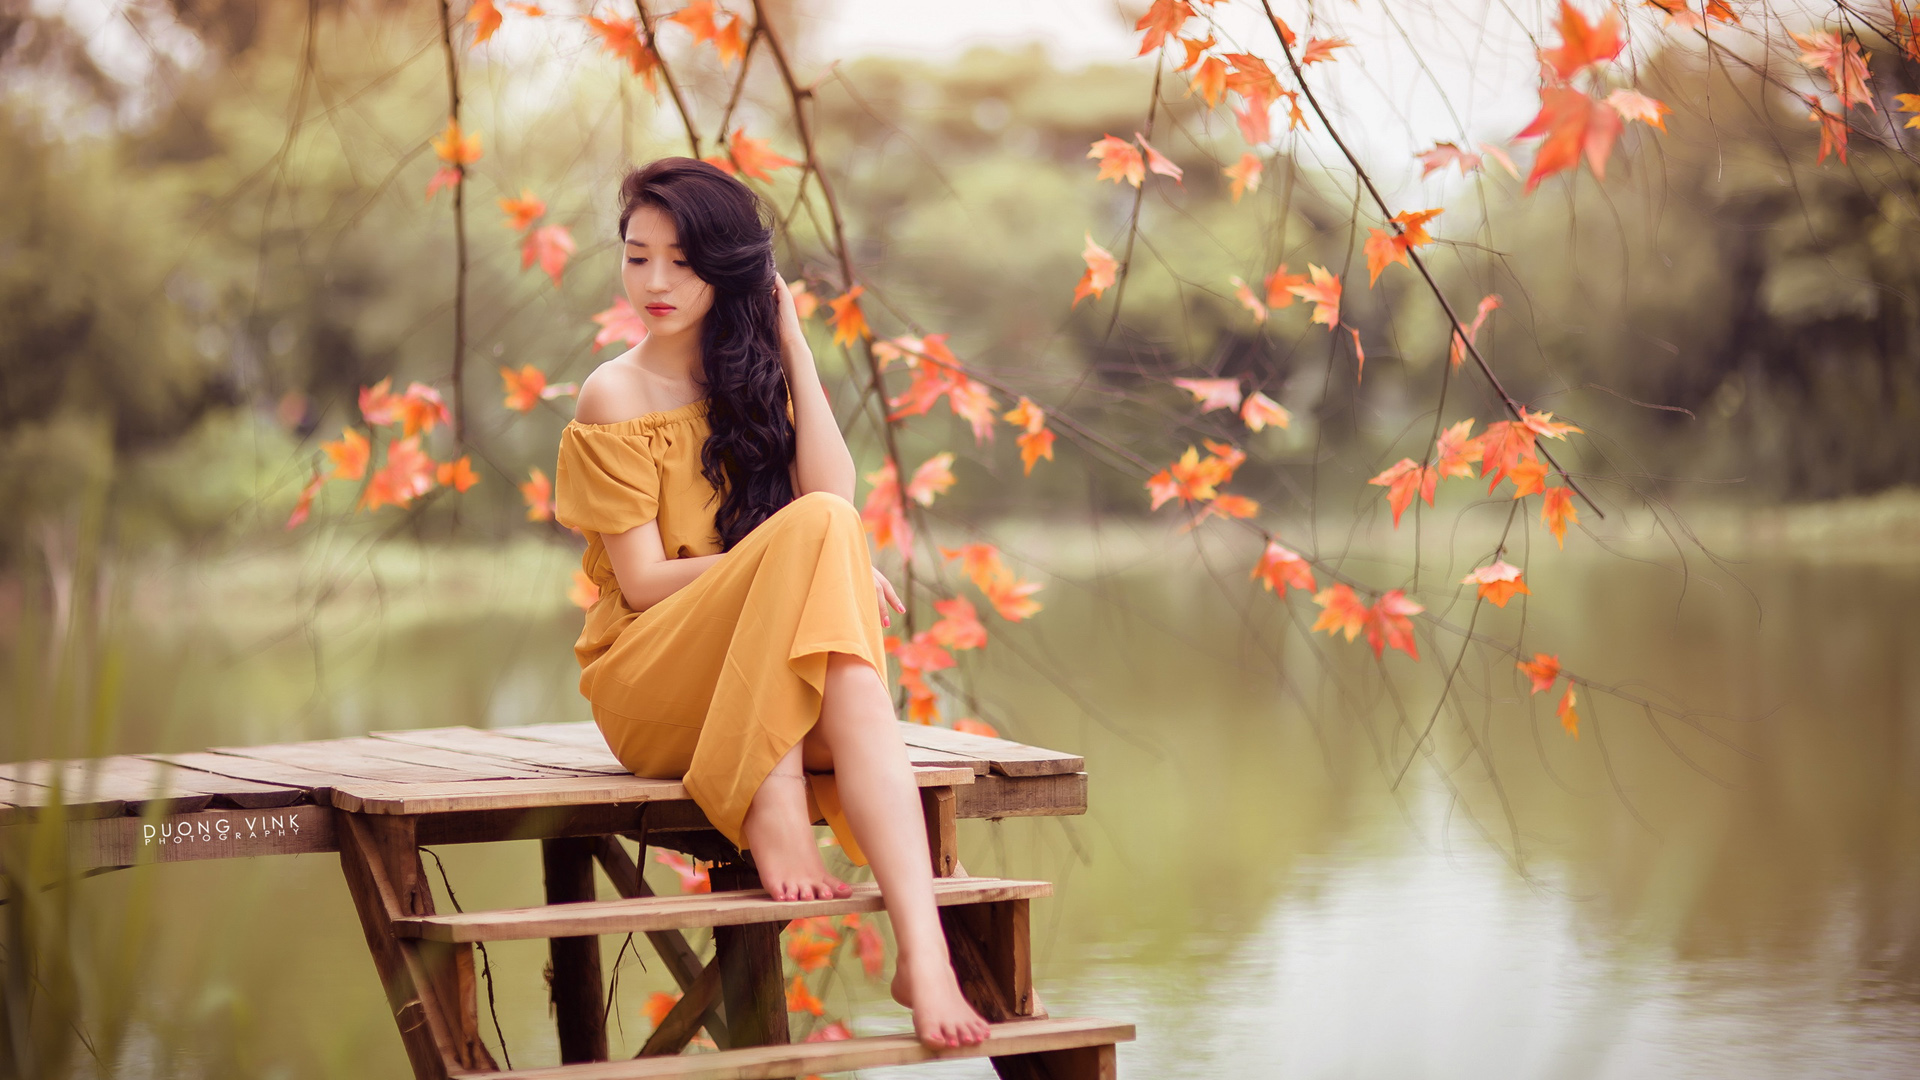 People 1920x1080 Asian women model photography long hair brunette fall leaves pier barefoot yellow dress long skirt